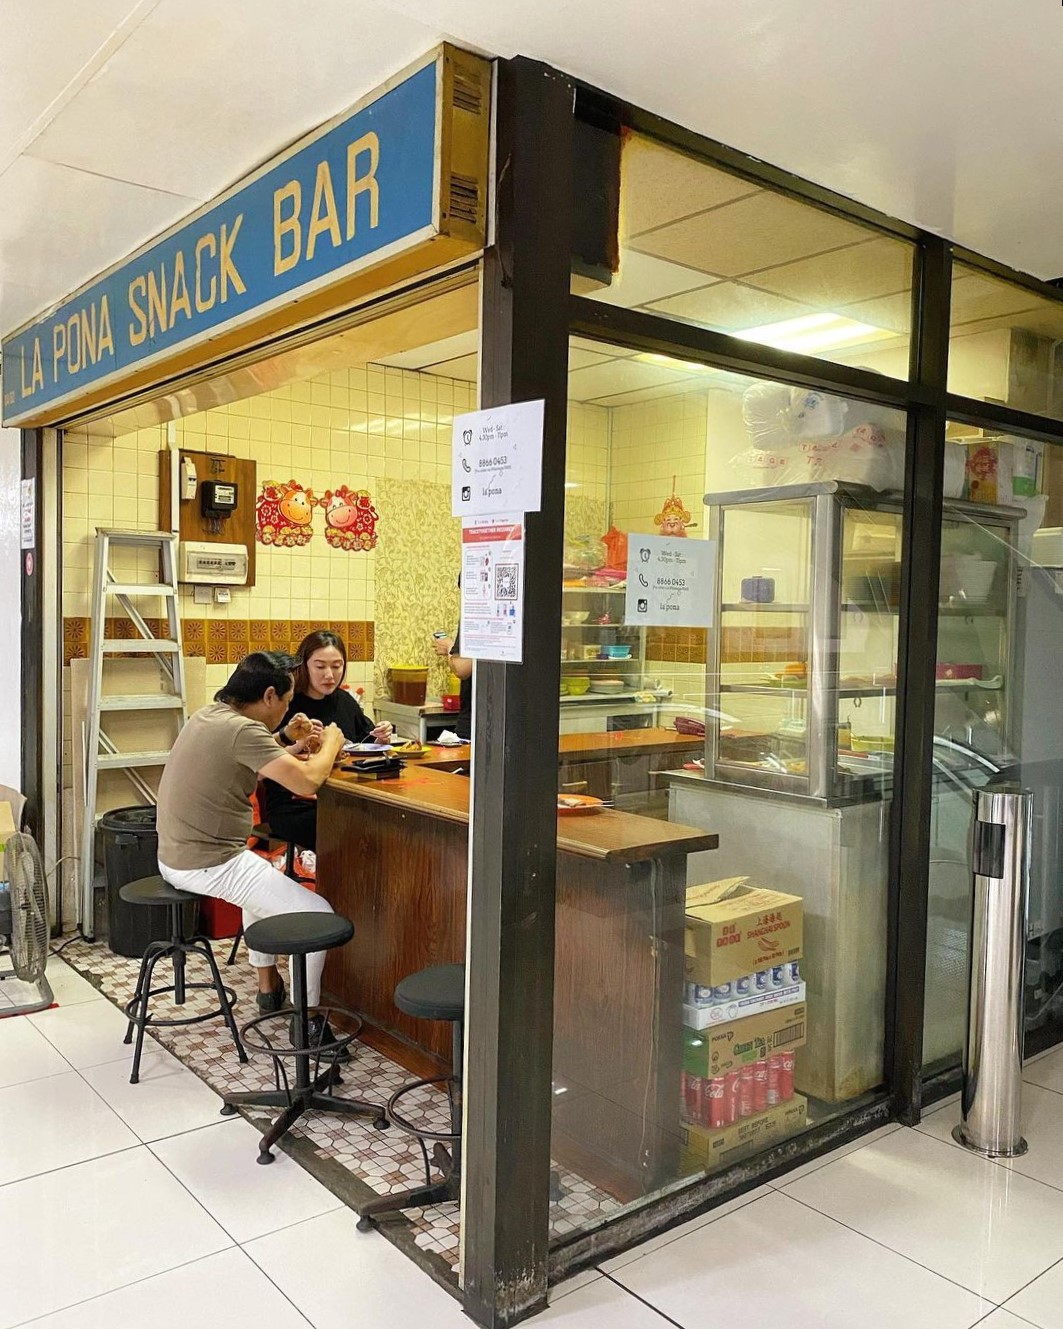 la-pona-snack-bar-storefront